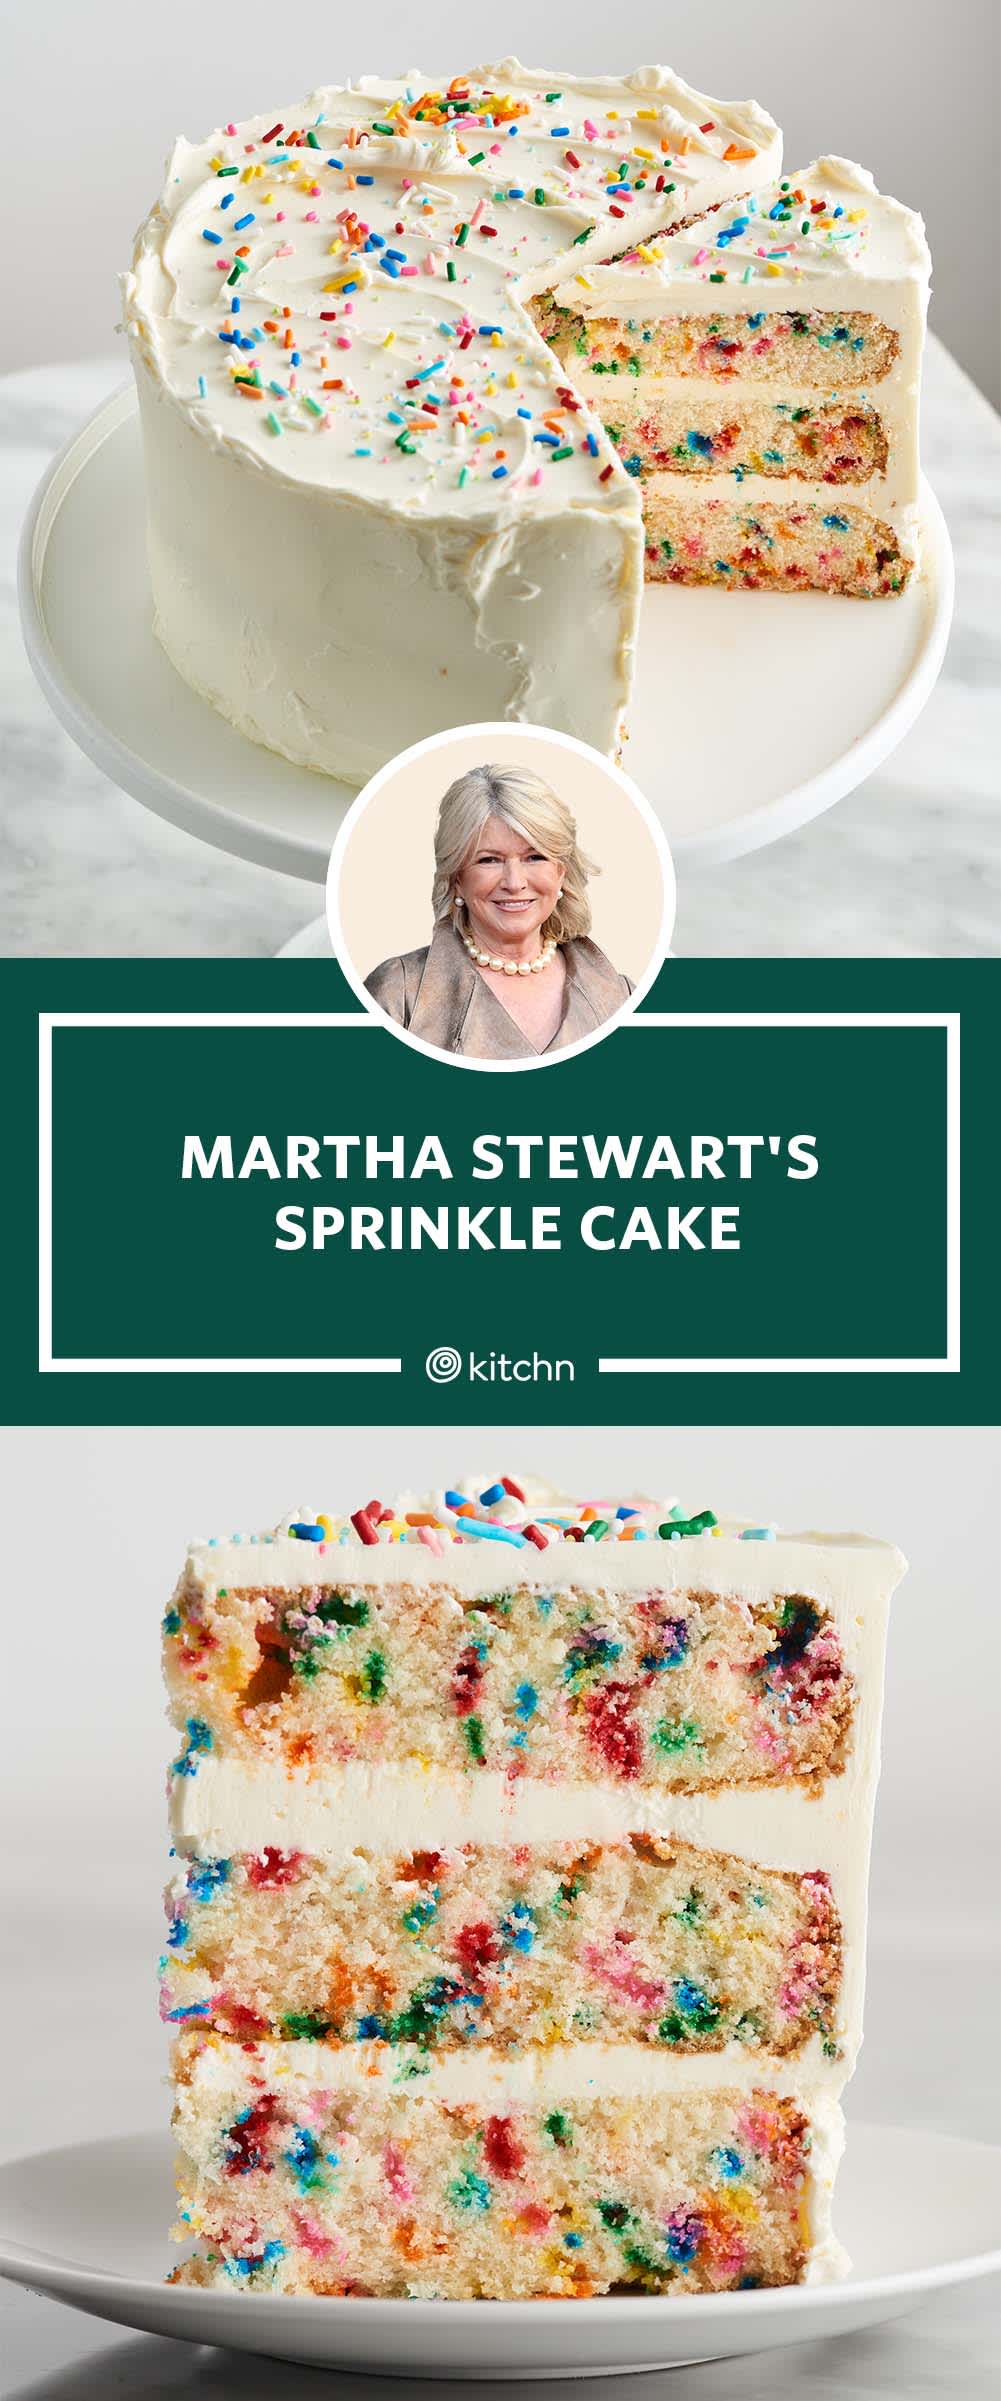 Cherry on a Cake: MARTHA STEWART'S CREAM CHEESE POUND CAKE